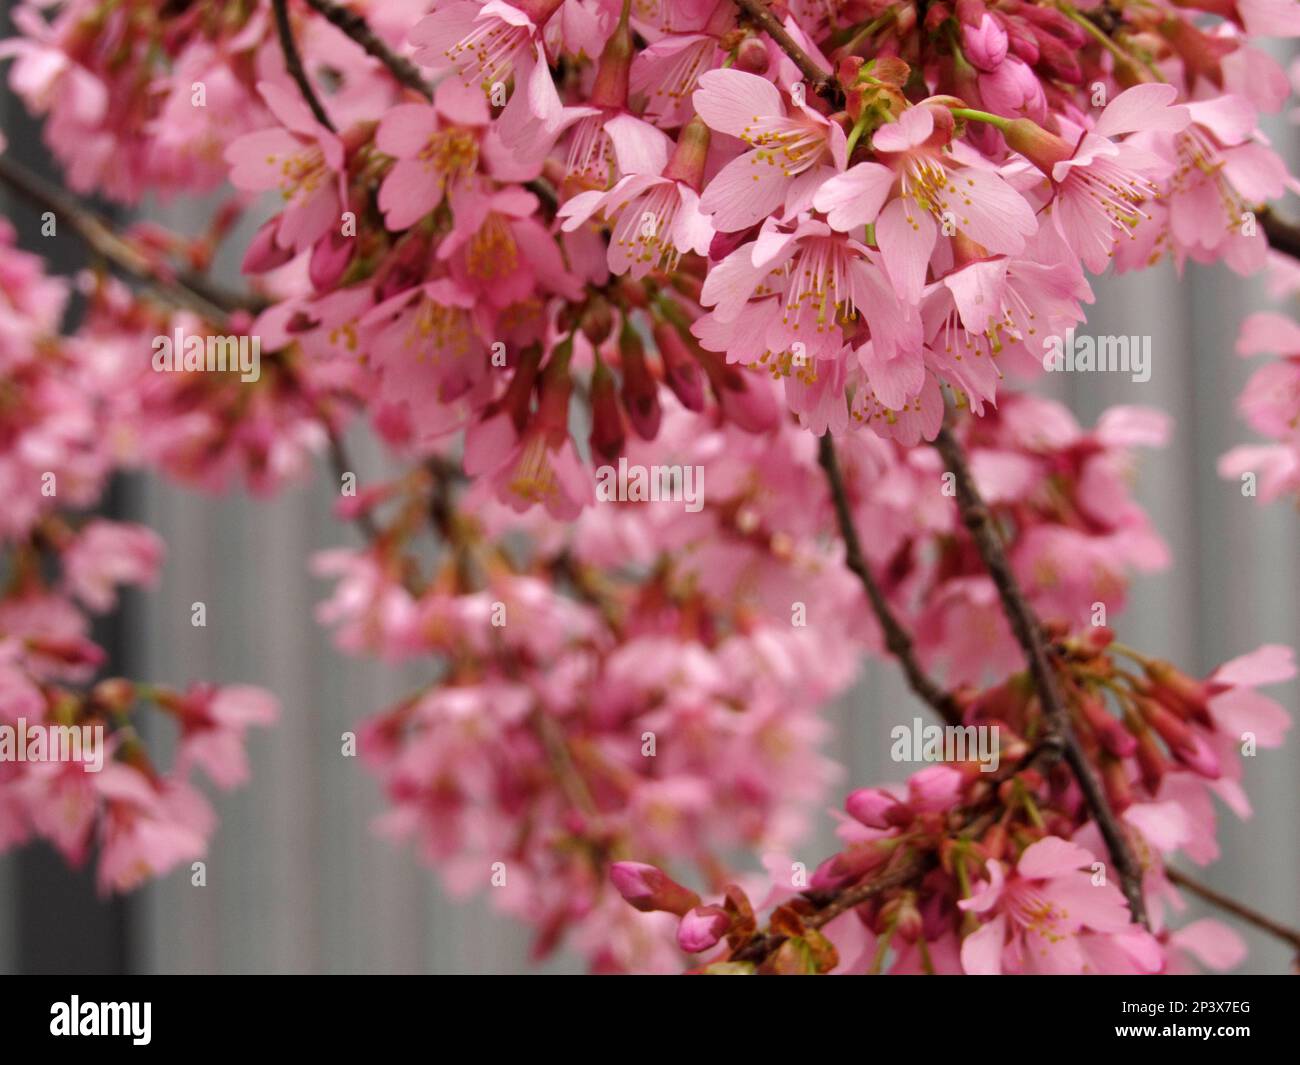 Winter-flowering cherries bloom as spring nears in Philadelphia's Fairmount neighborhood. Stock Photo